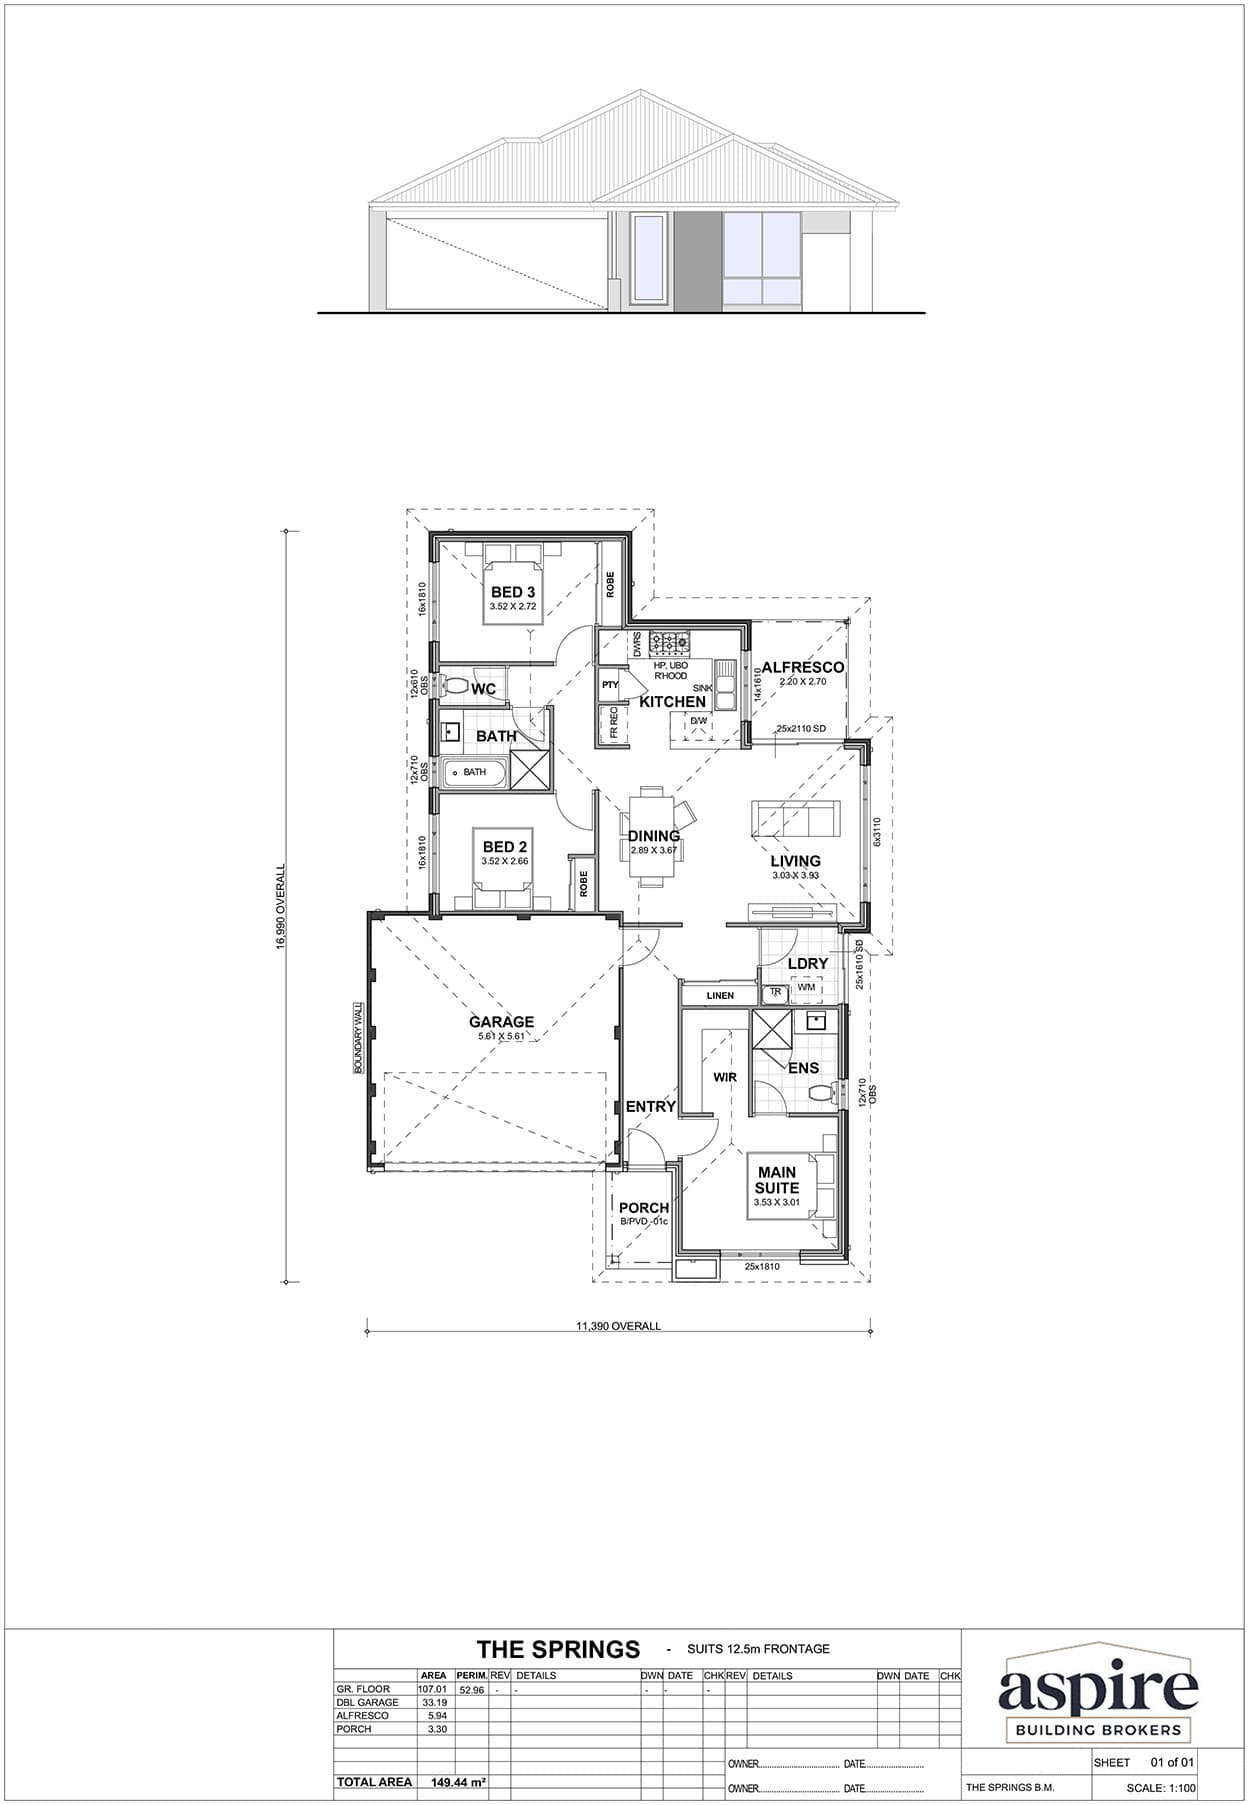 The Springs Floor Plan - Perth New Build Home Designs. 3 Bedrooms and 12.5m Block Width. Aspire Building Brokers